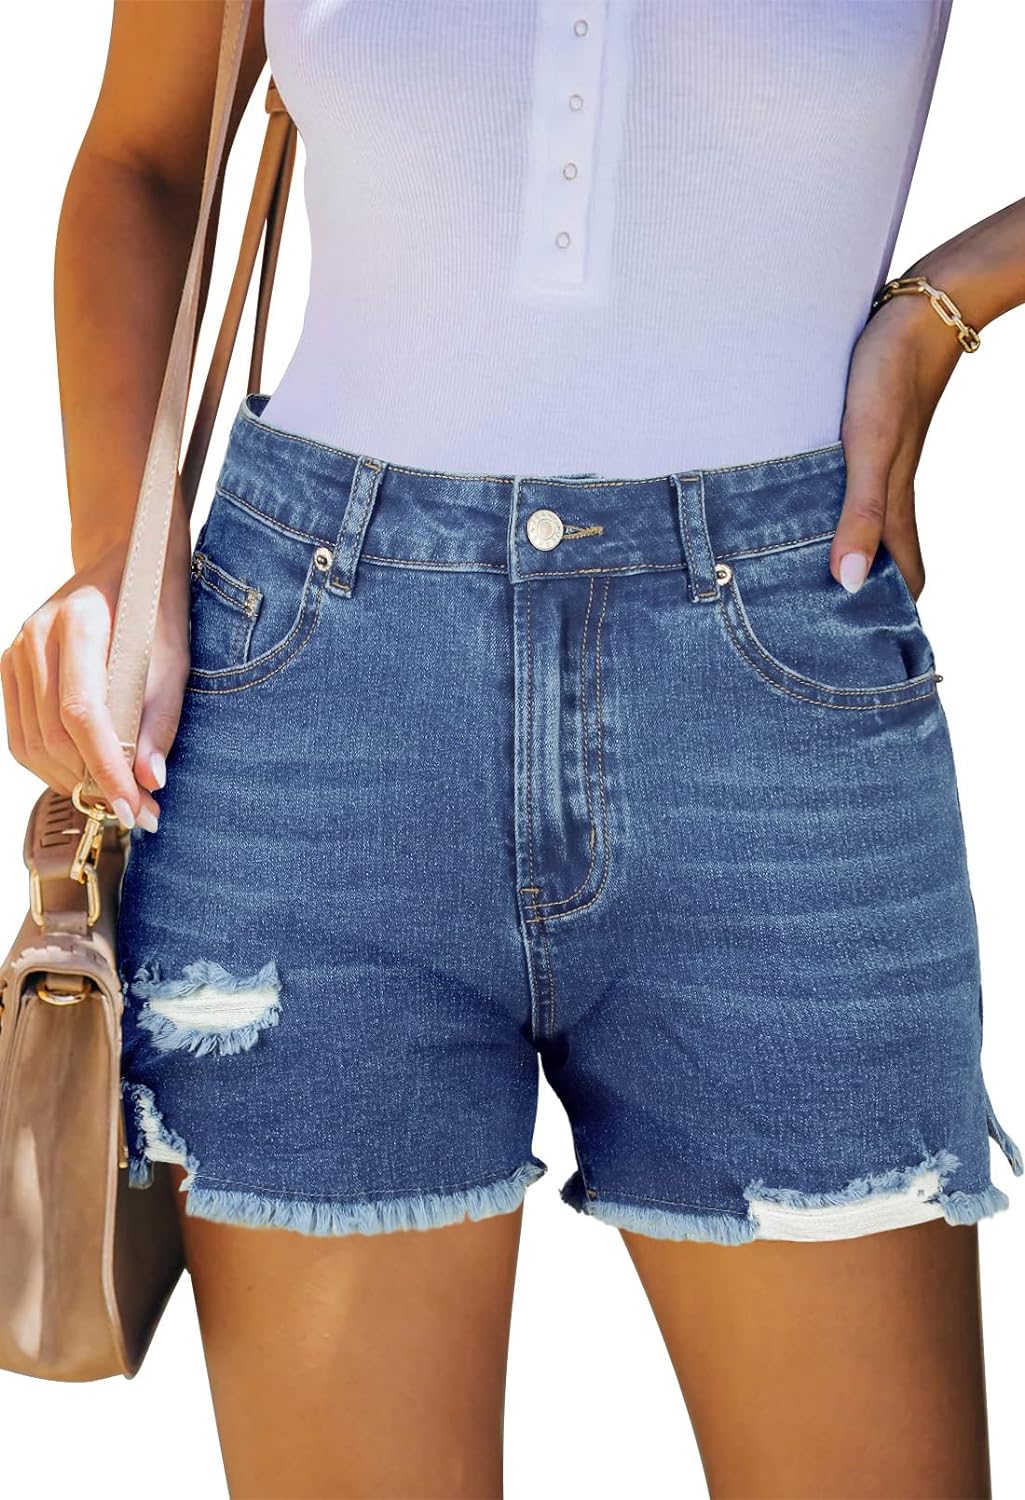 Women's High Waisted Denim Shorts Ripped Hem Frayed Distressed Short Jeans